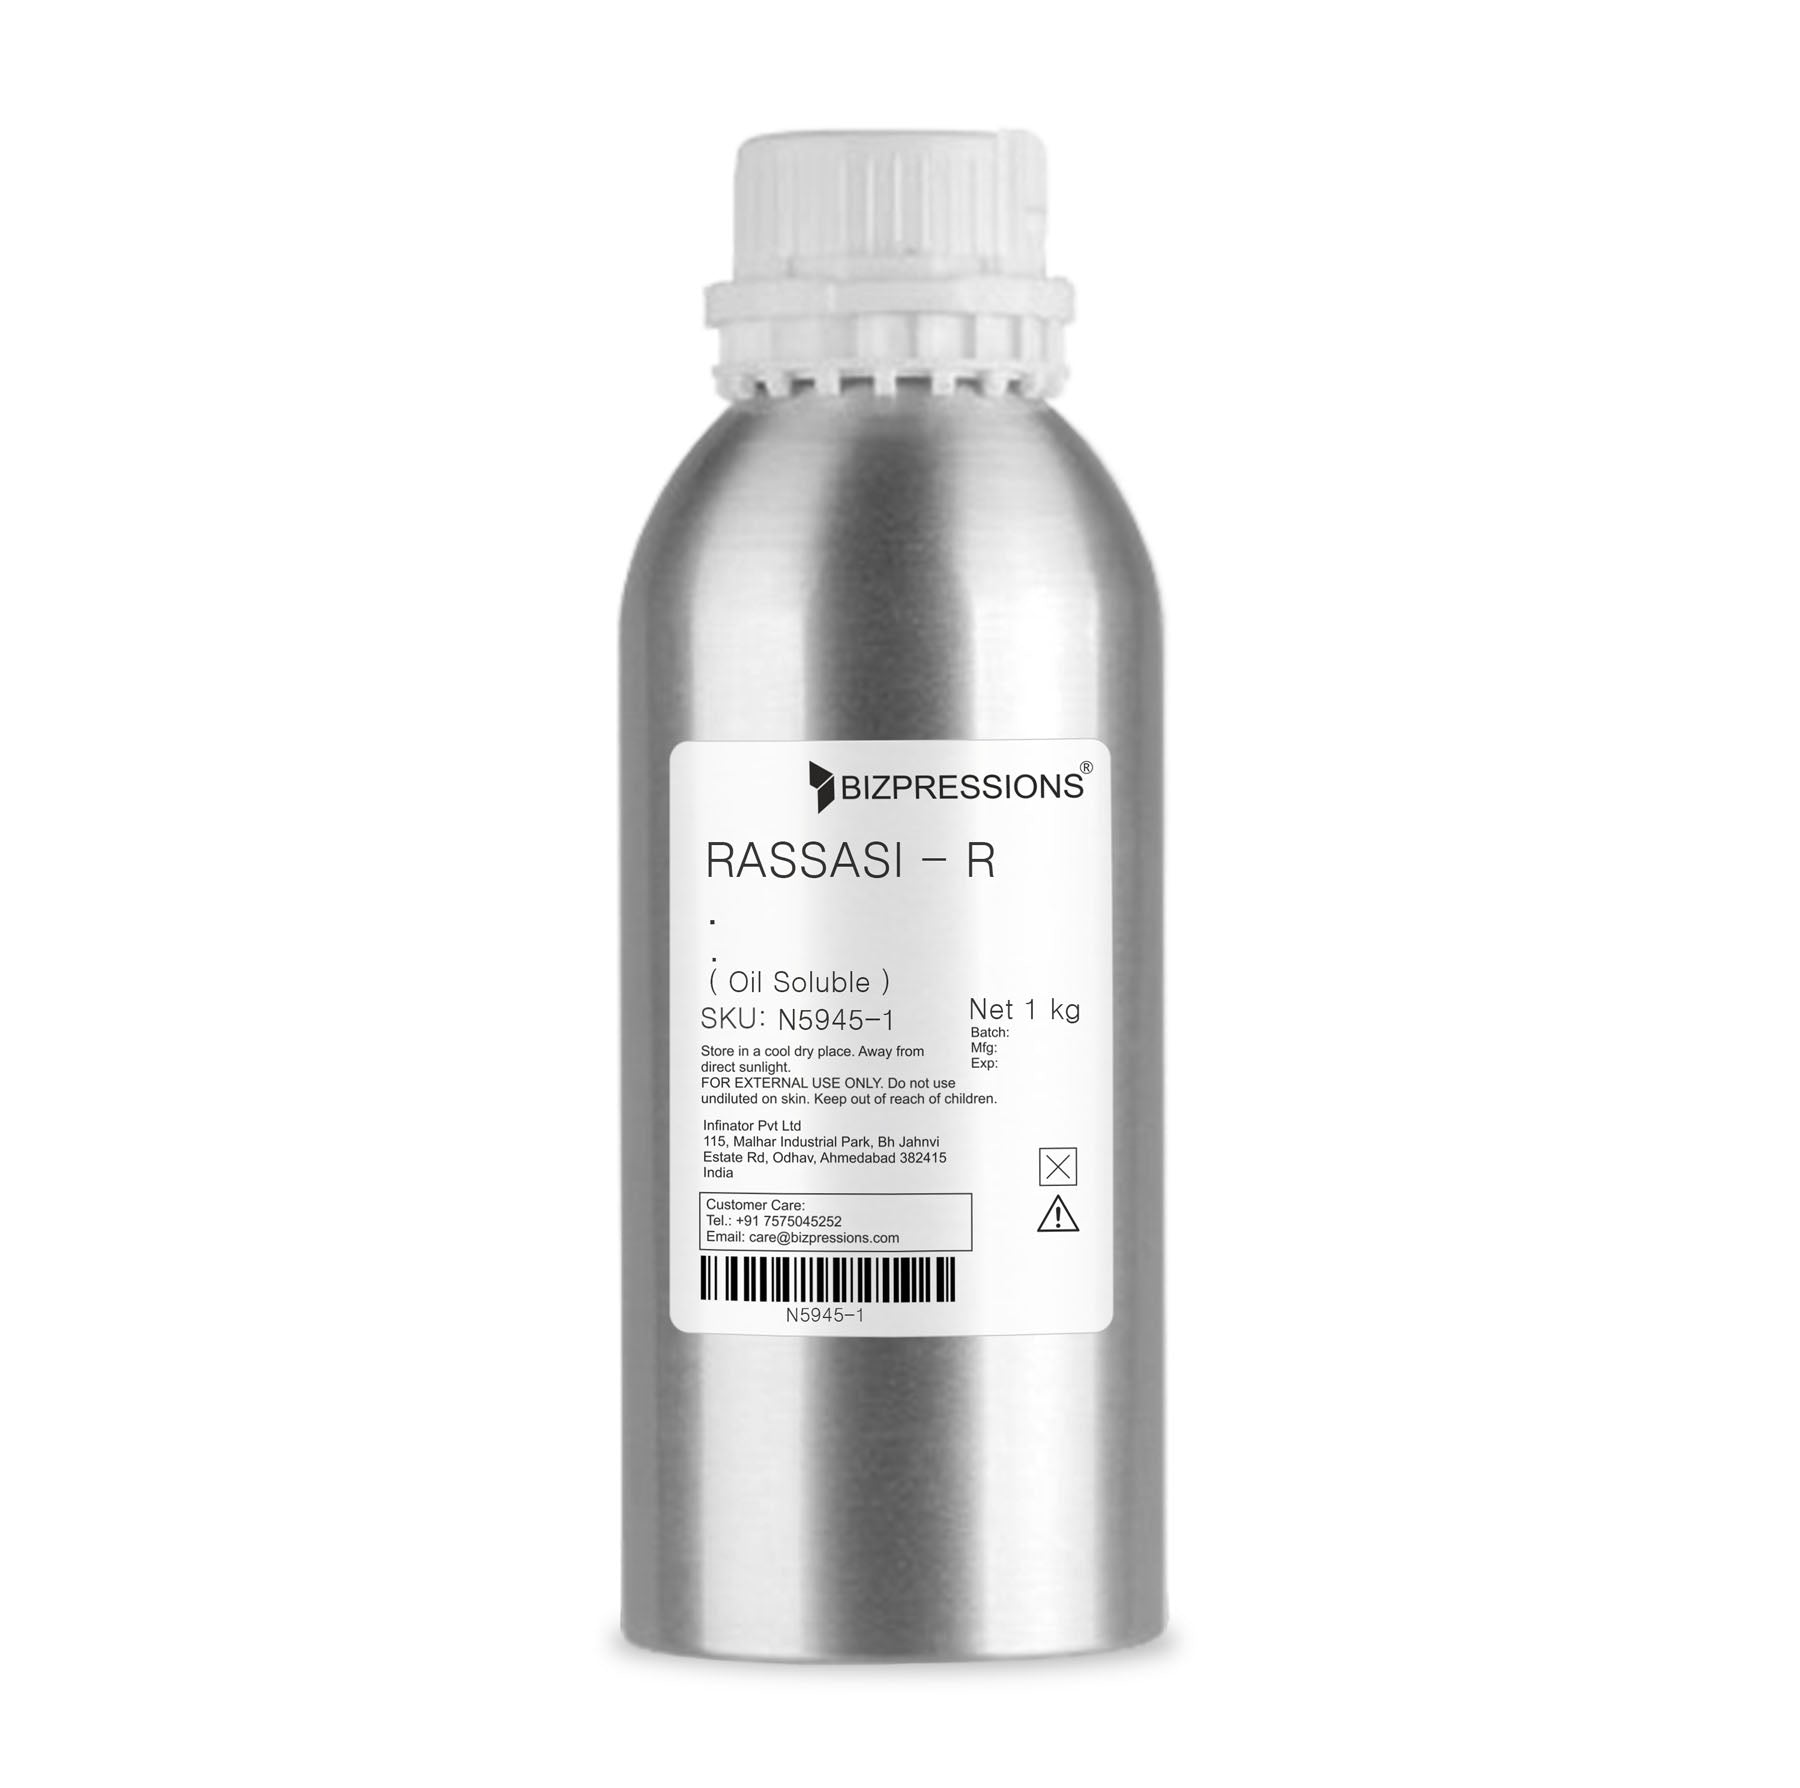 RASSASI - R - Fragrance ( Oil Soluble ) - 1 kg